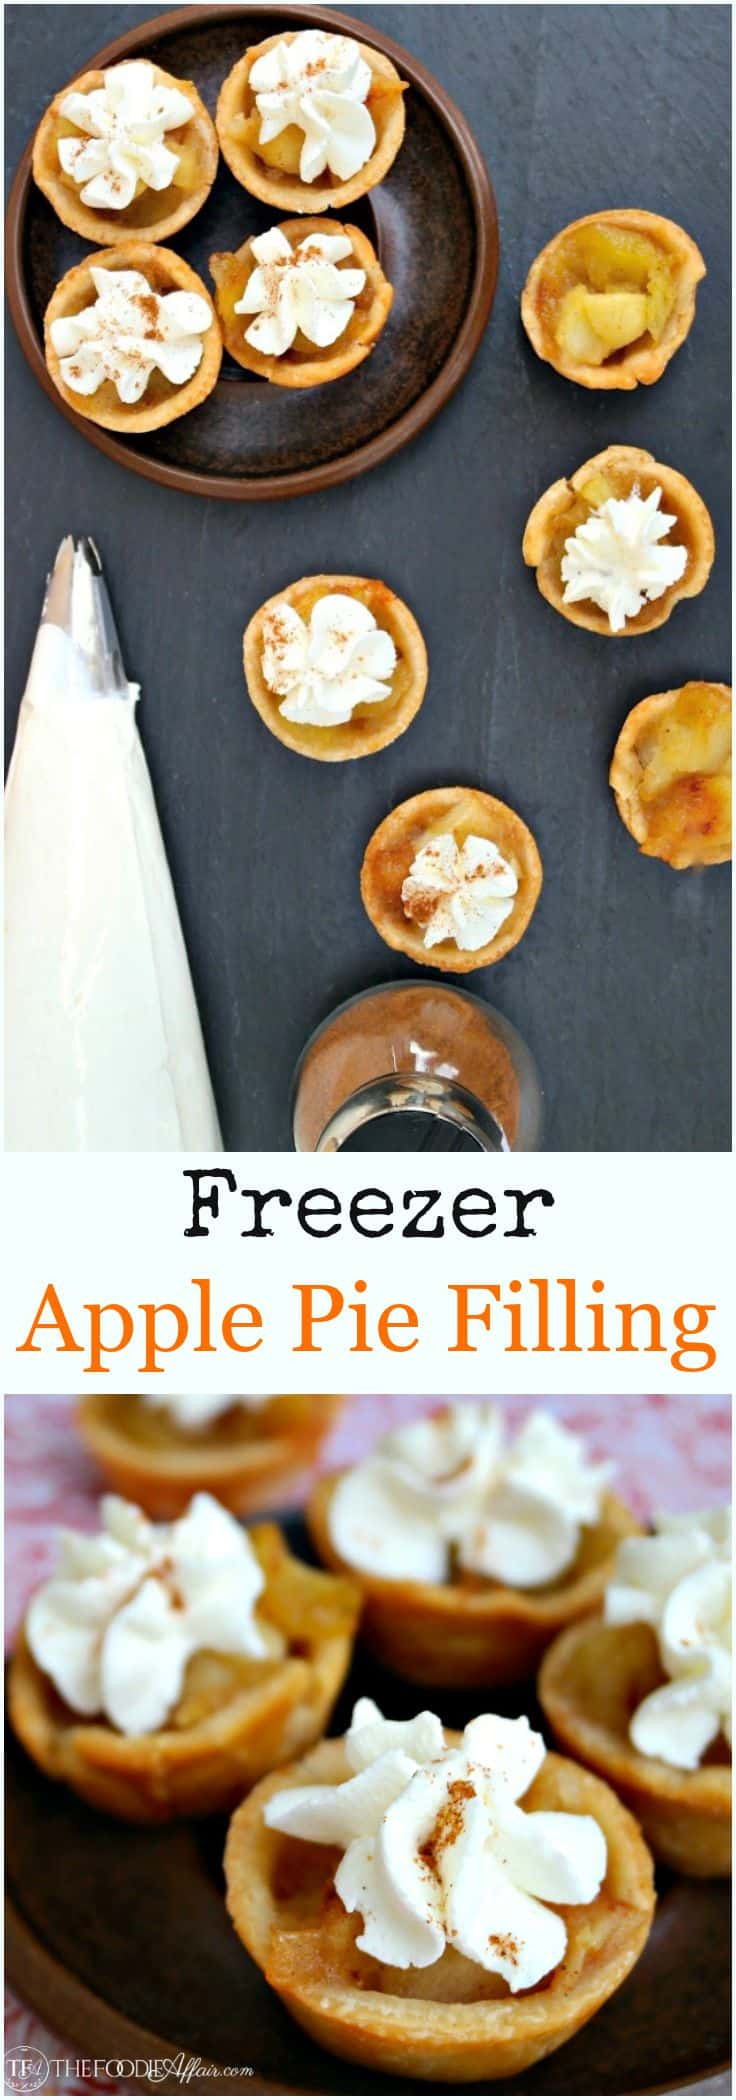 Freezer Apple Pie
 Freezer Apple Pie Filling